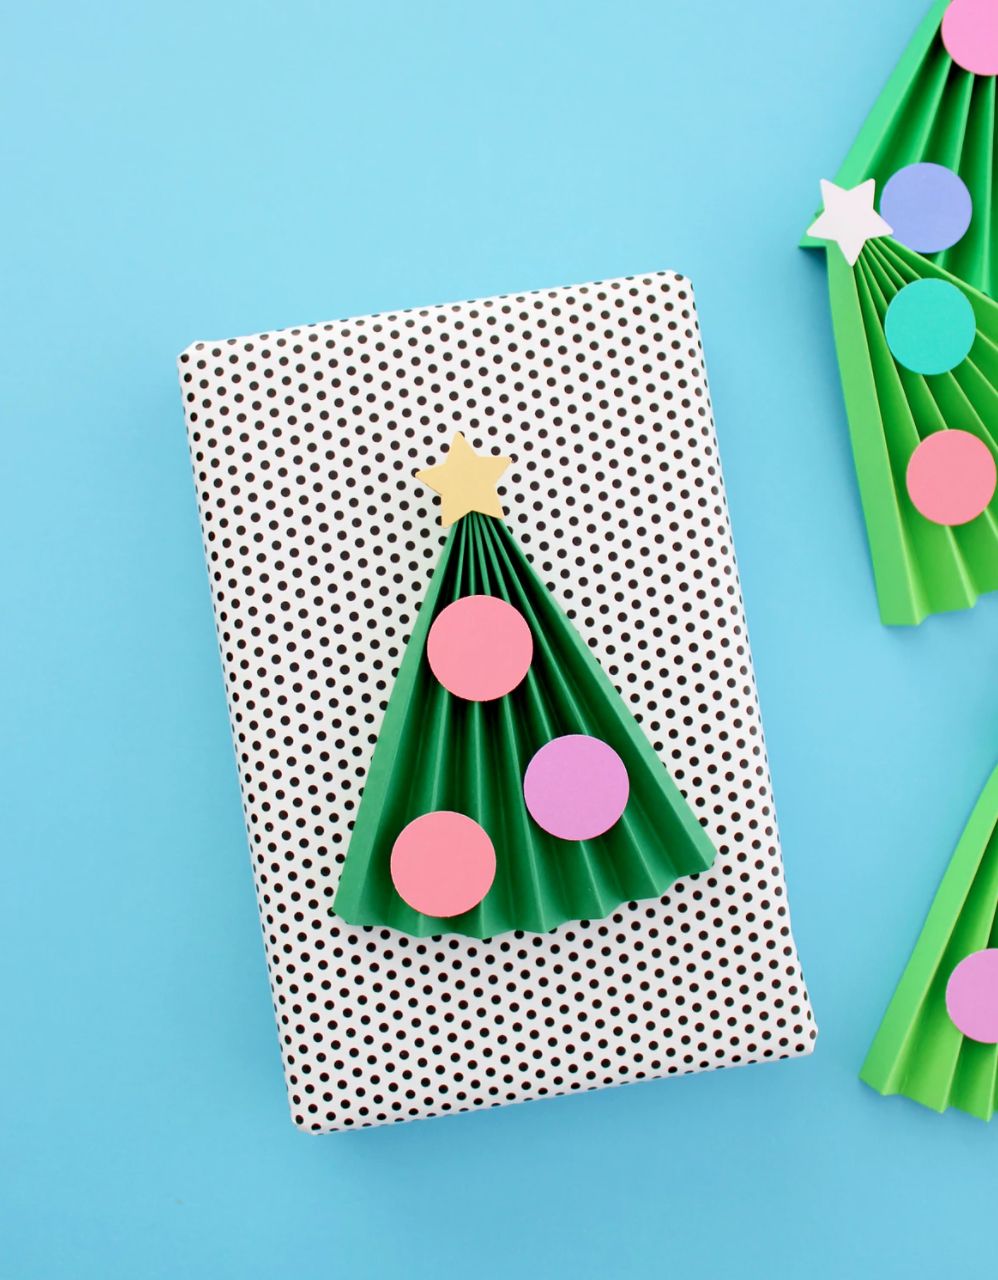 Easy Origami Paper Gift Idea /Cute Gift Idea /Origami mini gift /Origami  Craft With Color Paper /DIY 